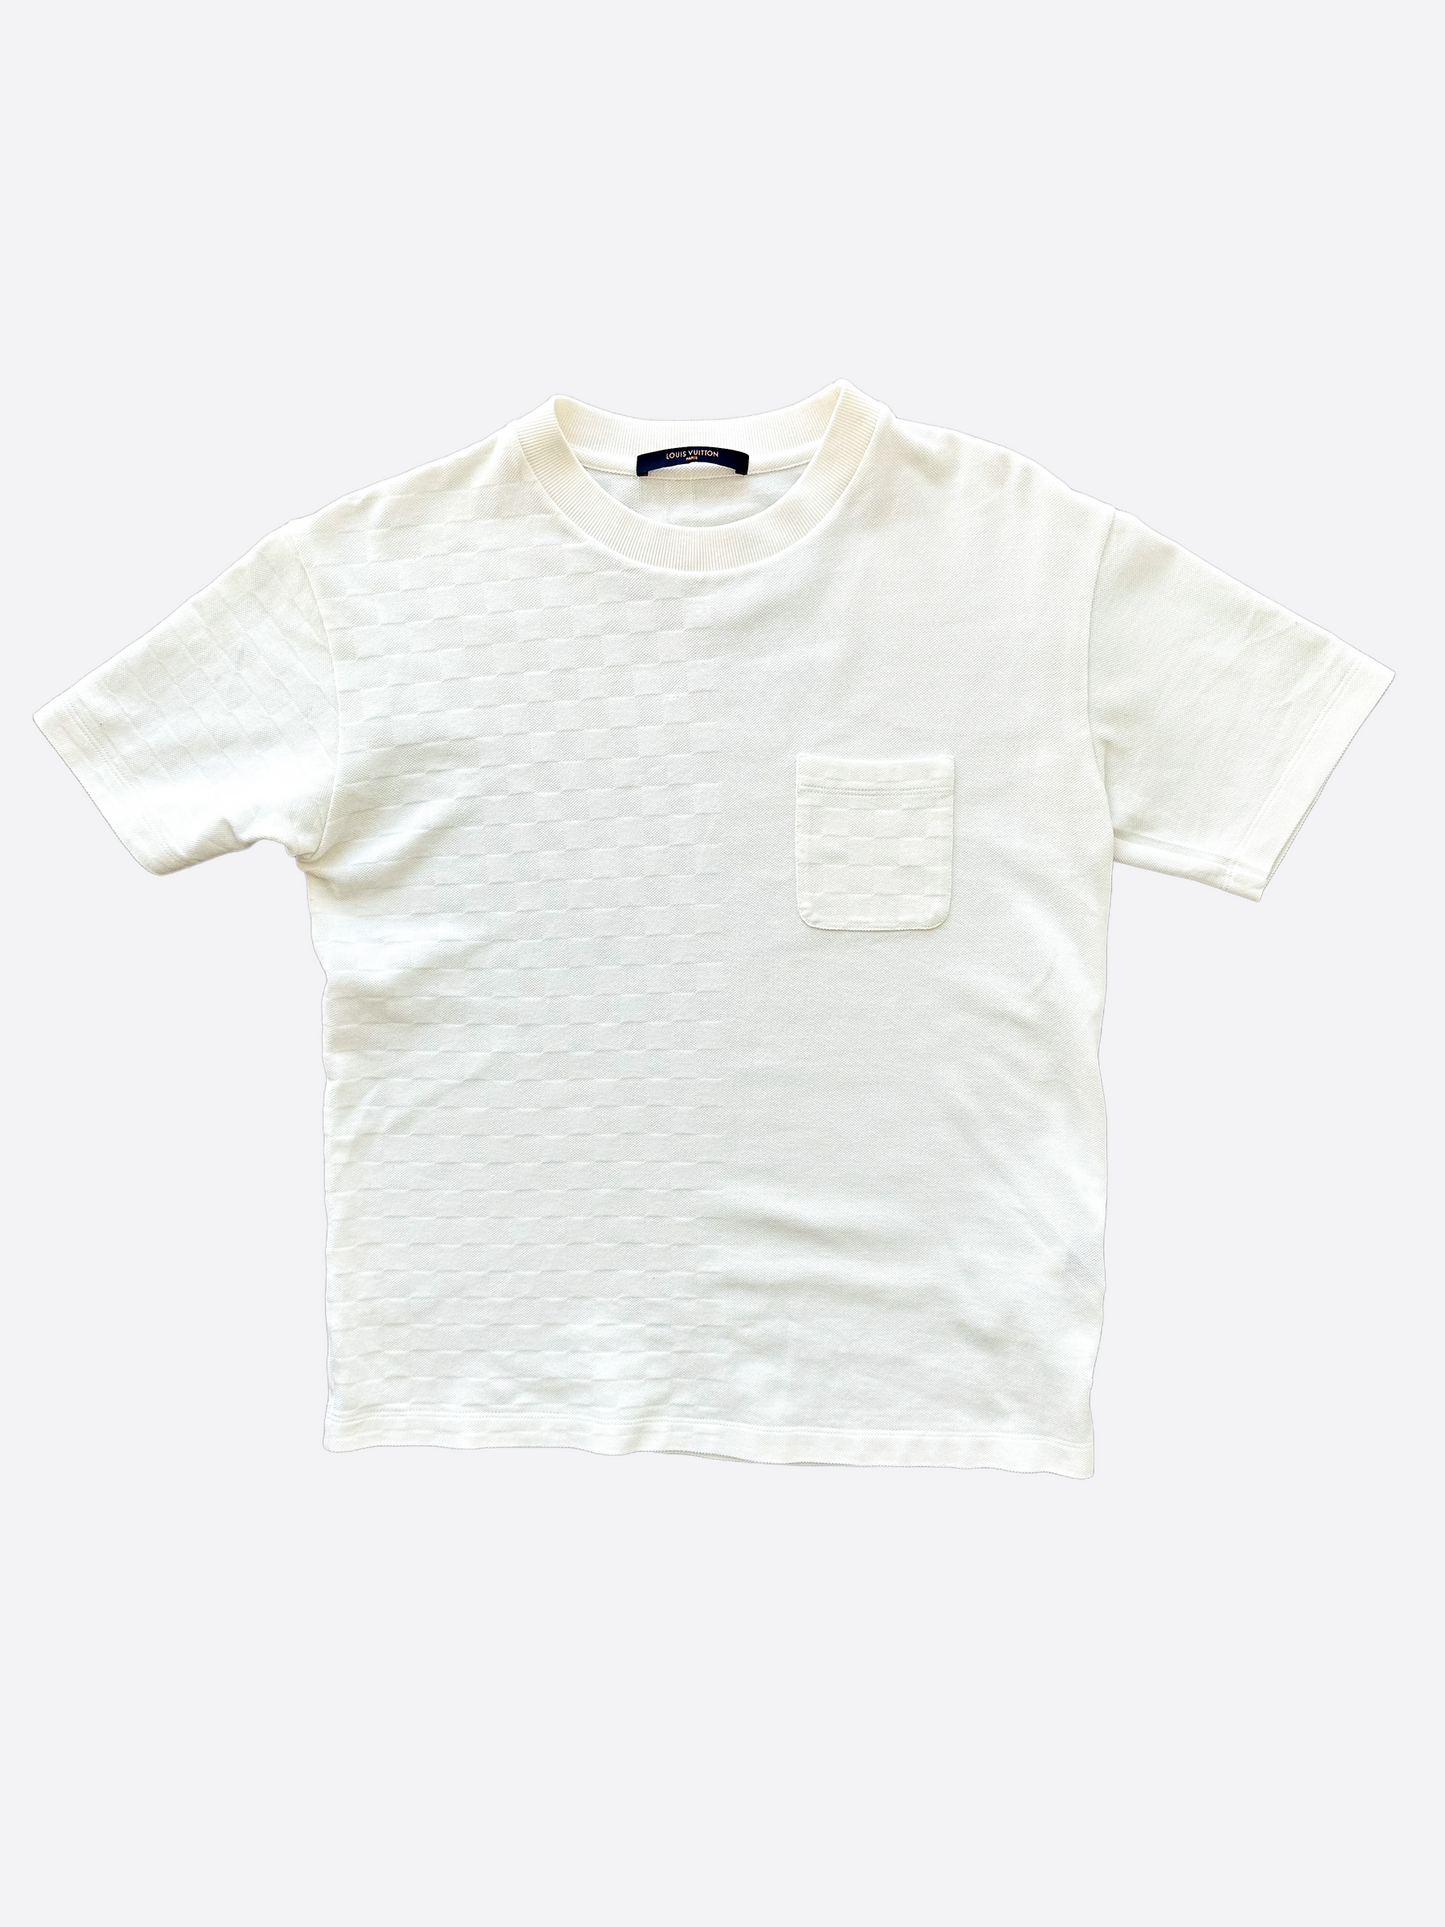 Louis Vuitton, Shirts, Louis Vuitton Lvse Half Damier Pocket Polo